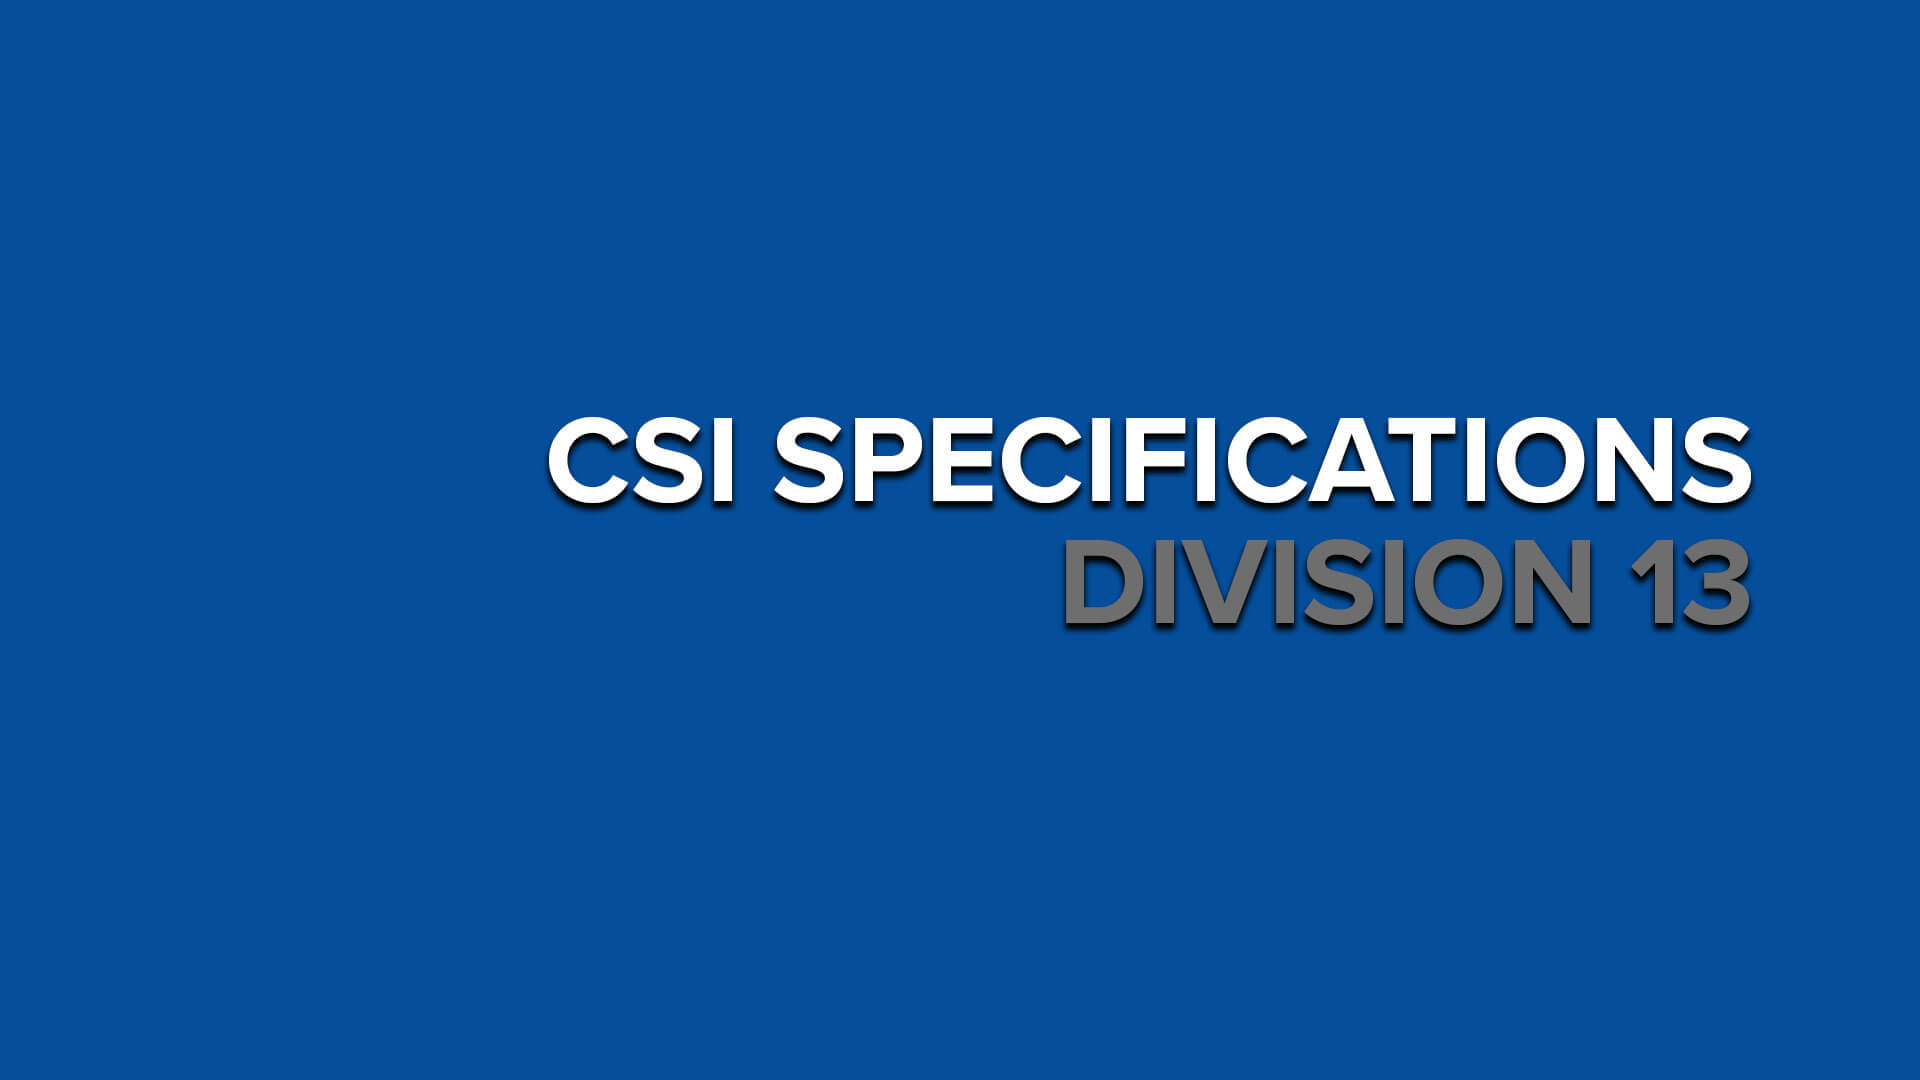 Csi specifications division 13